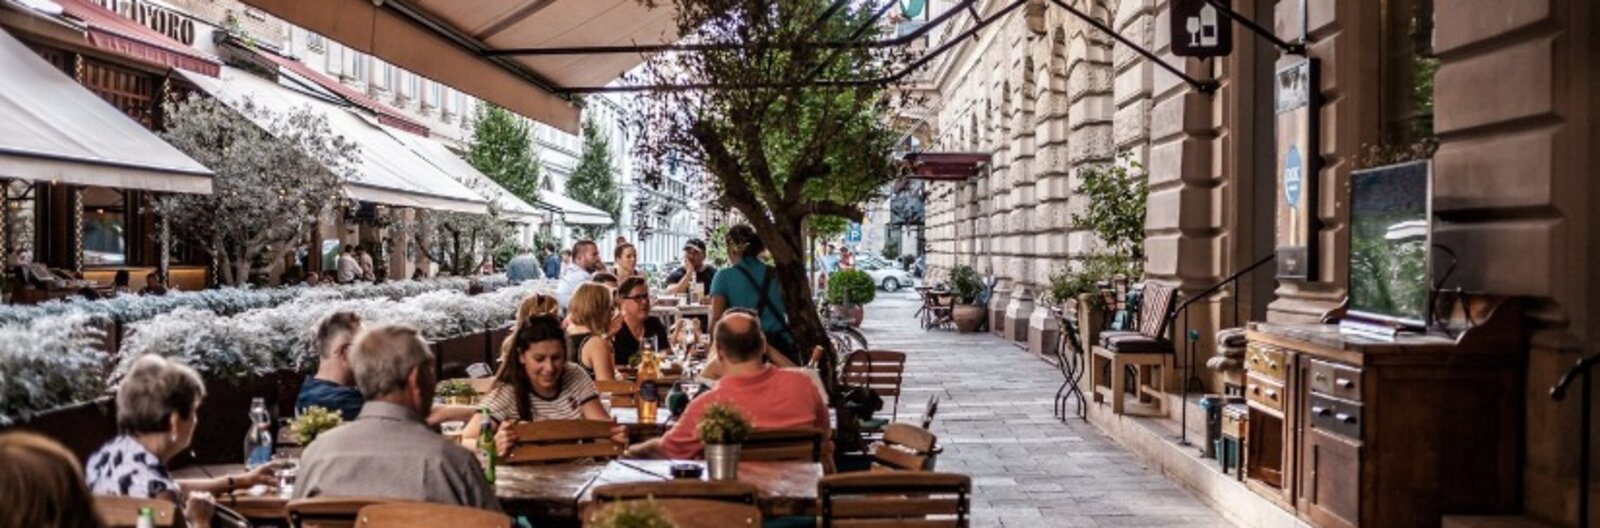 Savor the fine food of Via Italia, Budapest’s own “Little Italy”